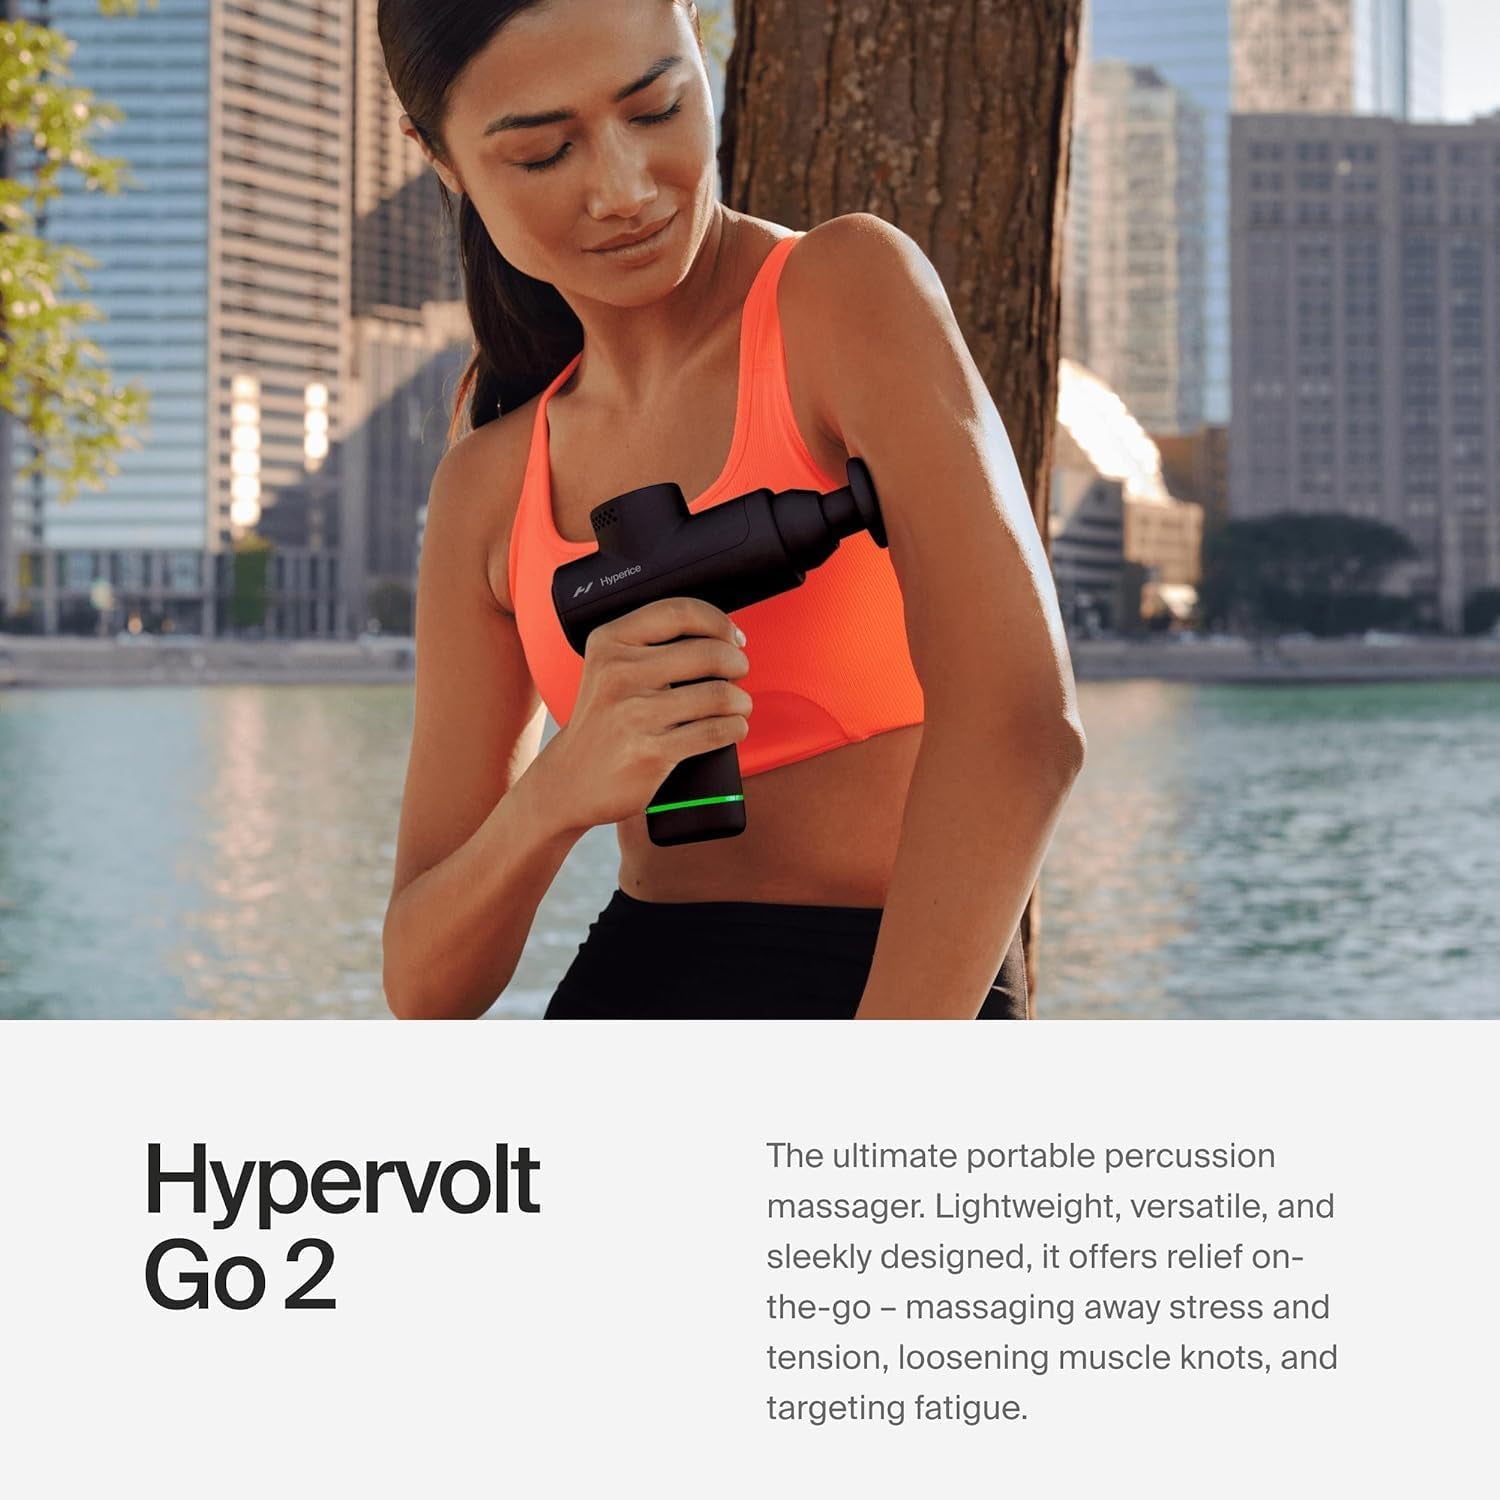 Hypervolt Go 2 Portable Percussion Lacrosse Massage Gun - How to use 